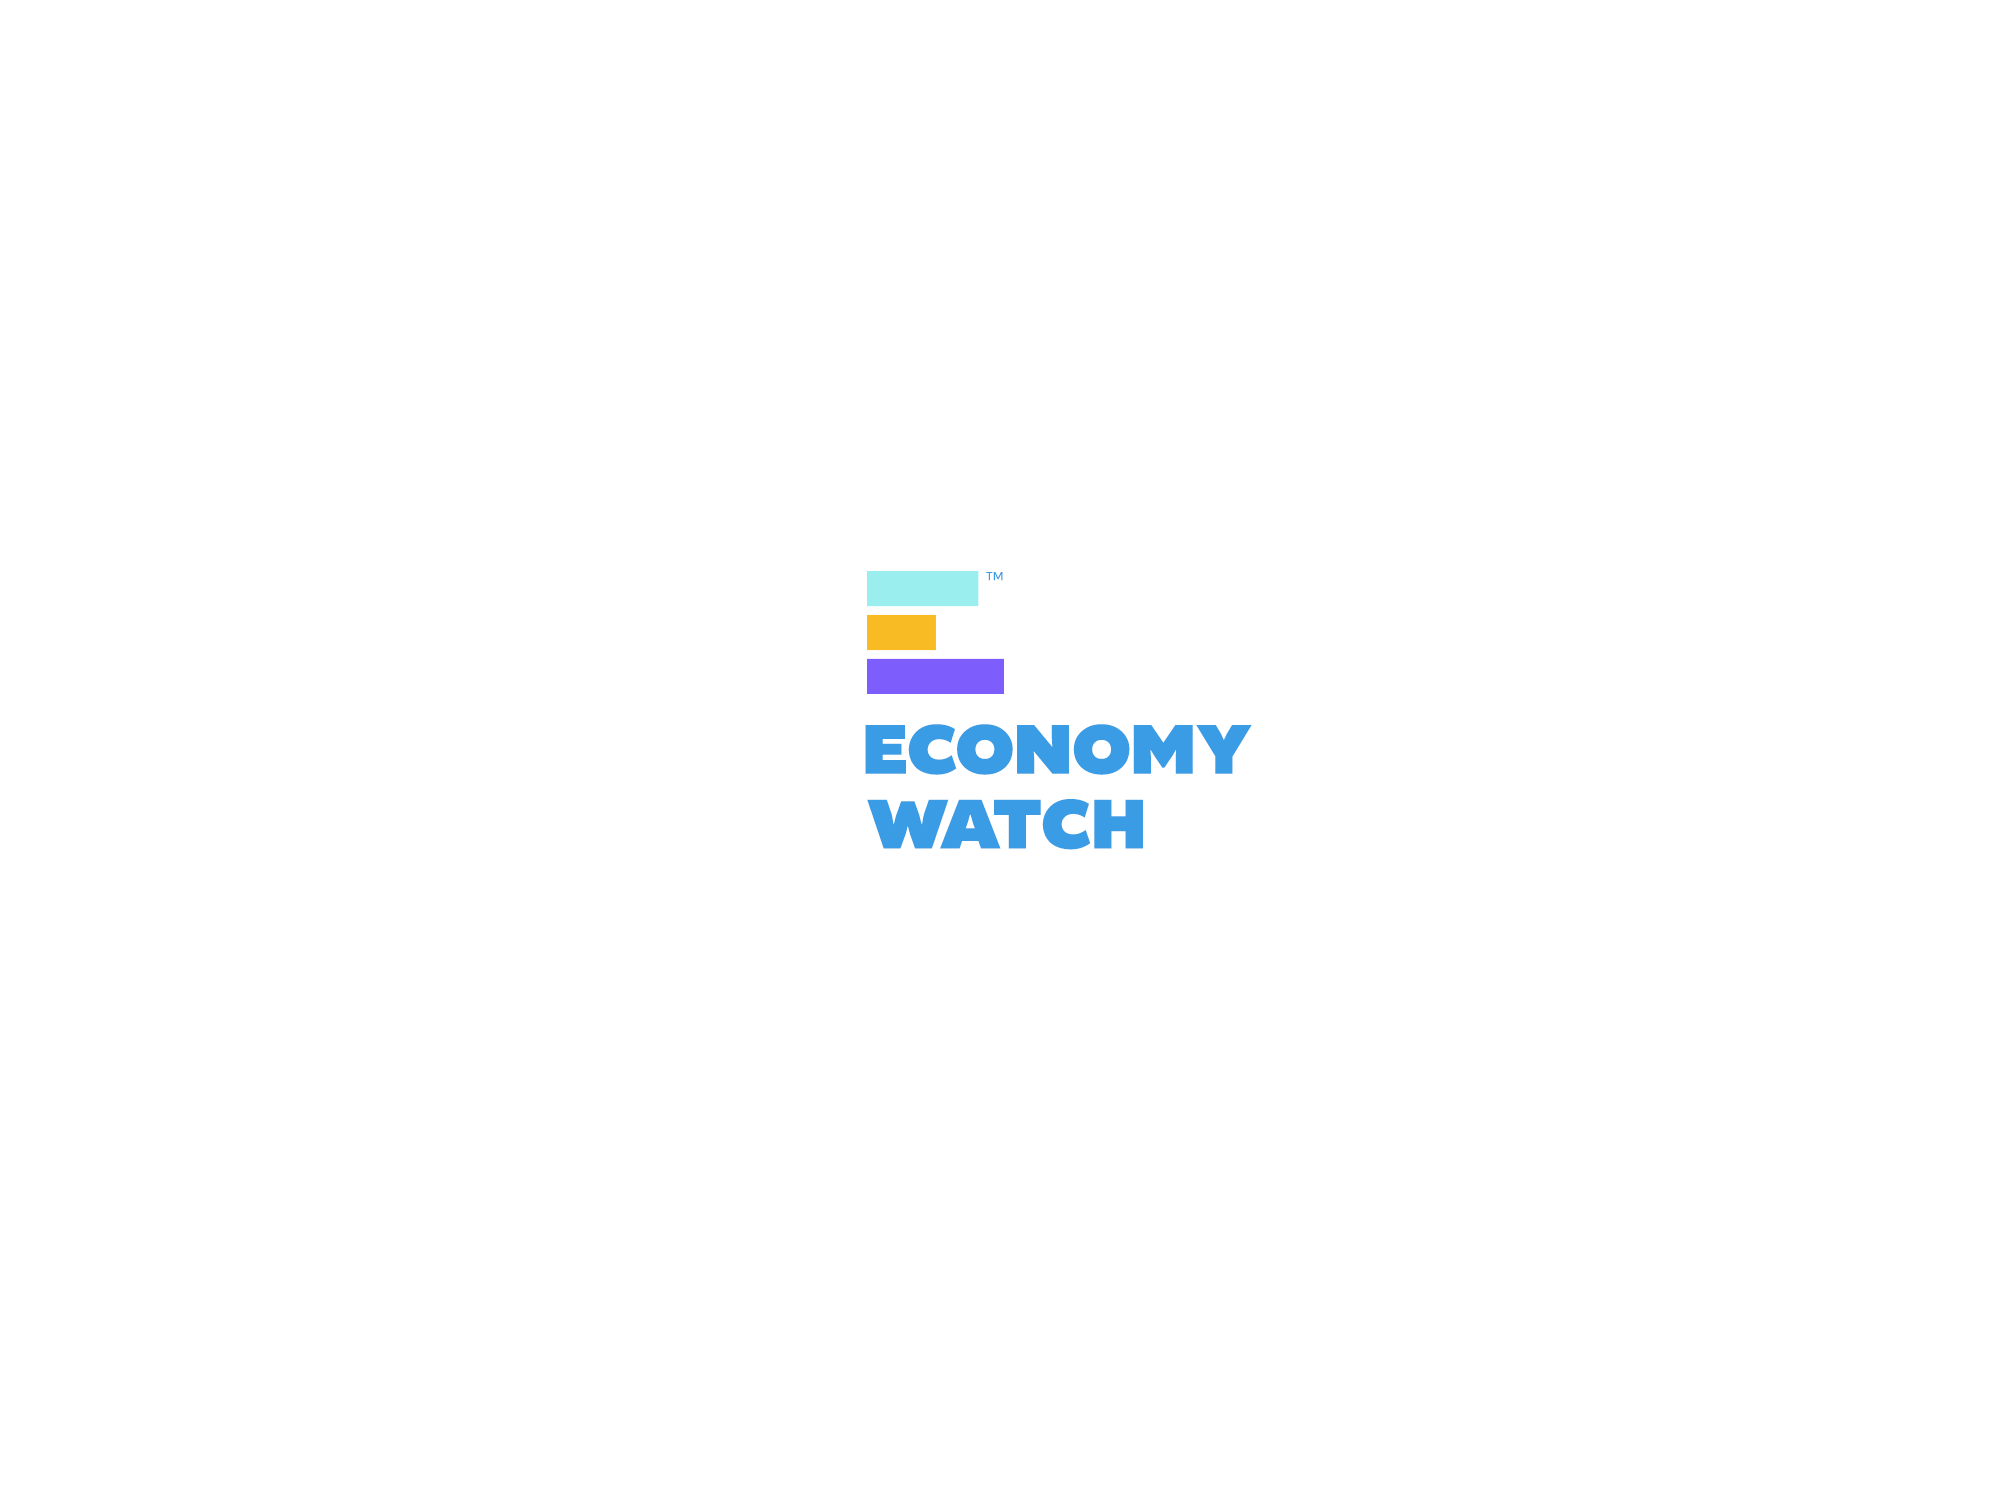 EY on LinkedIn: Economy Watch - August 2022